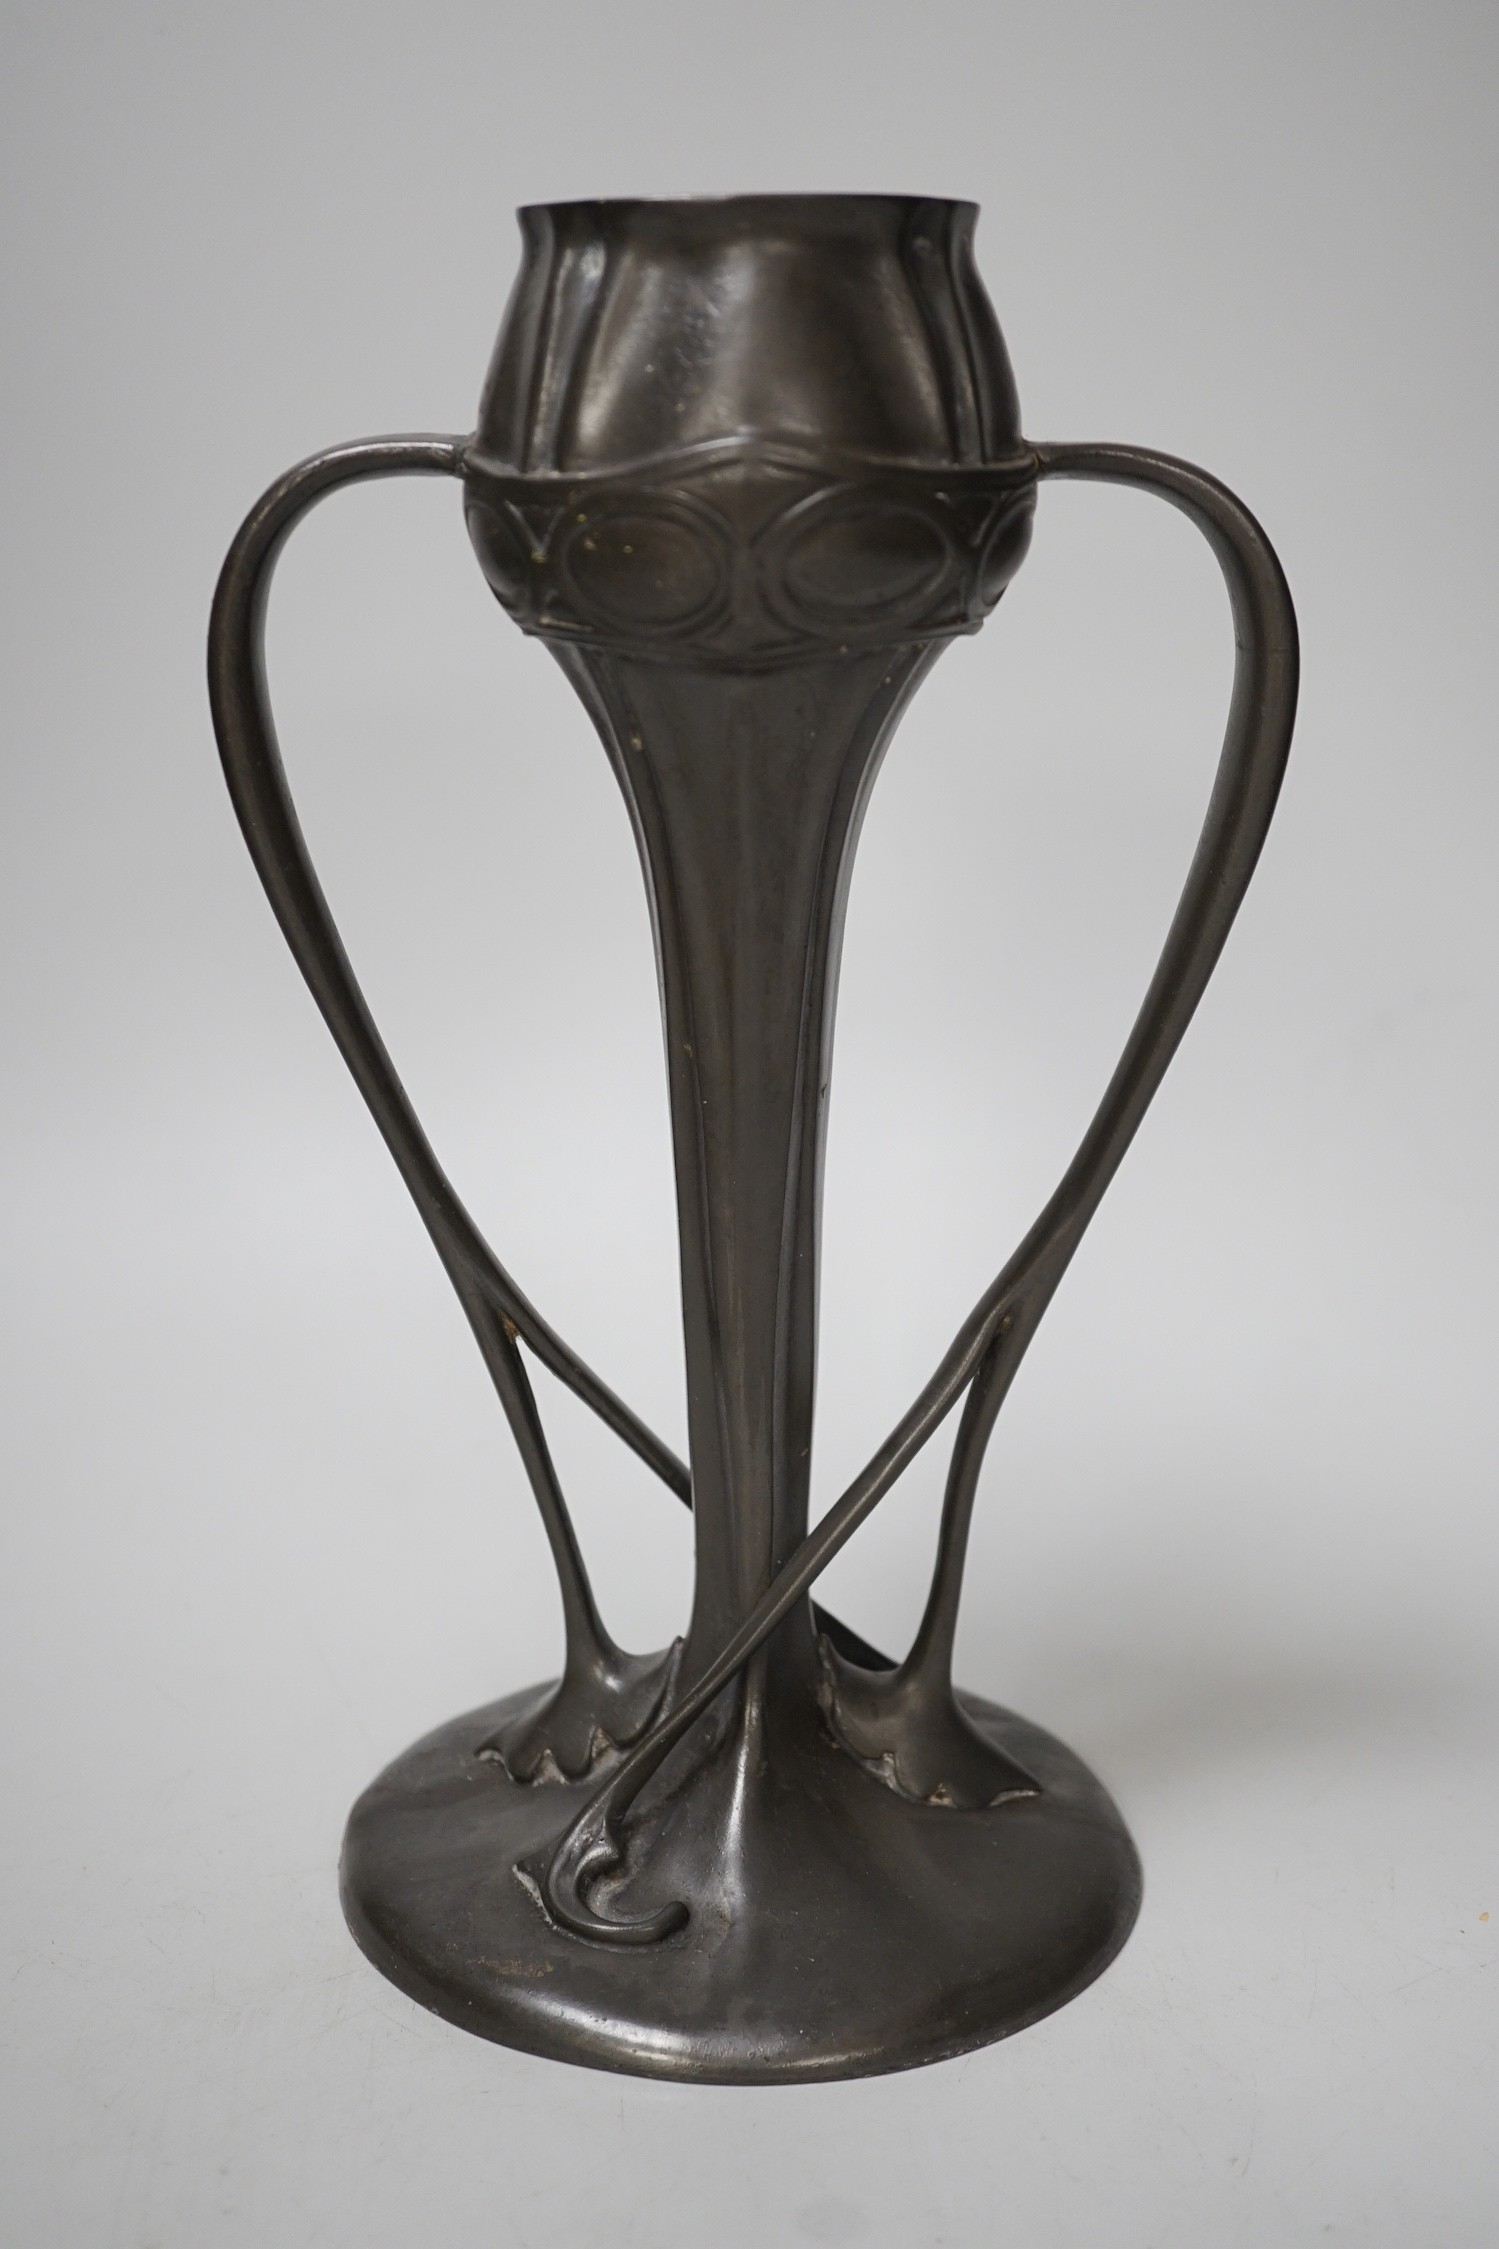 A Tudric pewter vase, model no. 029, 25cm tall